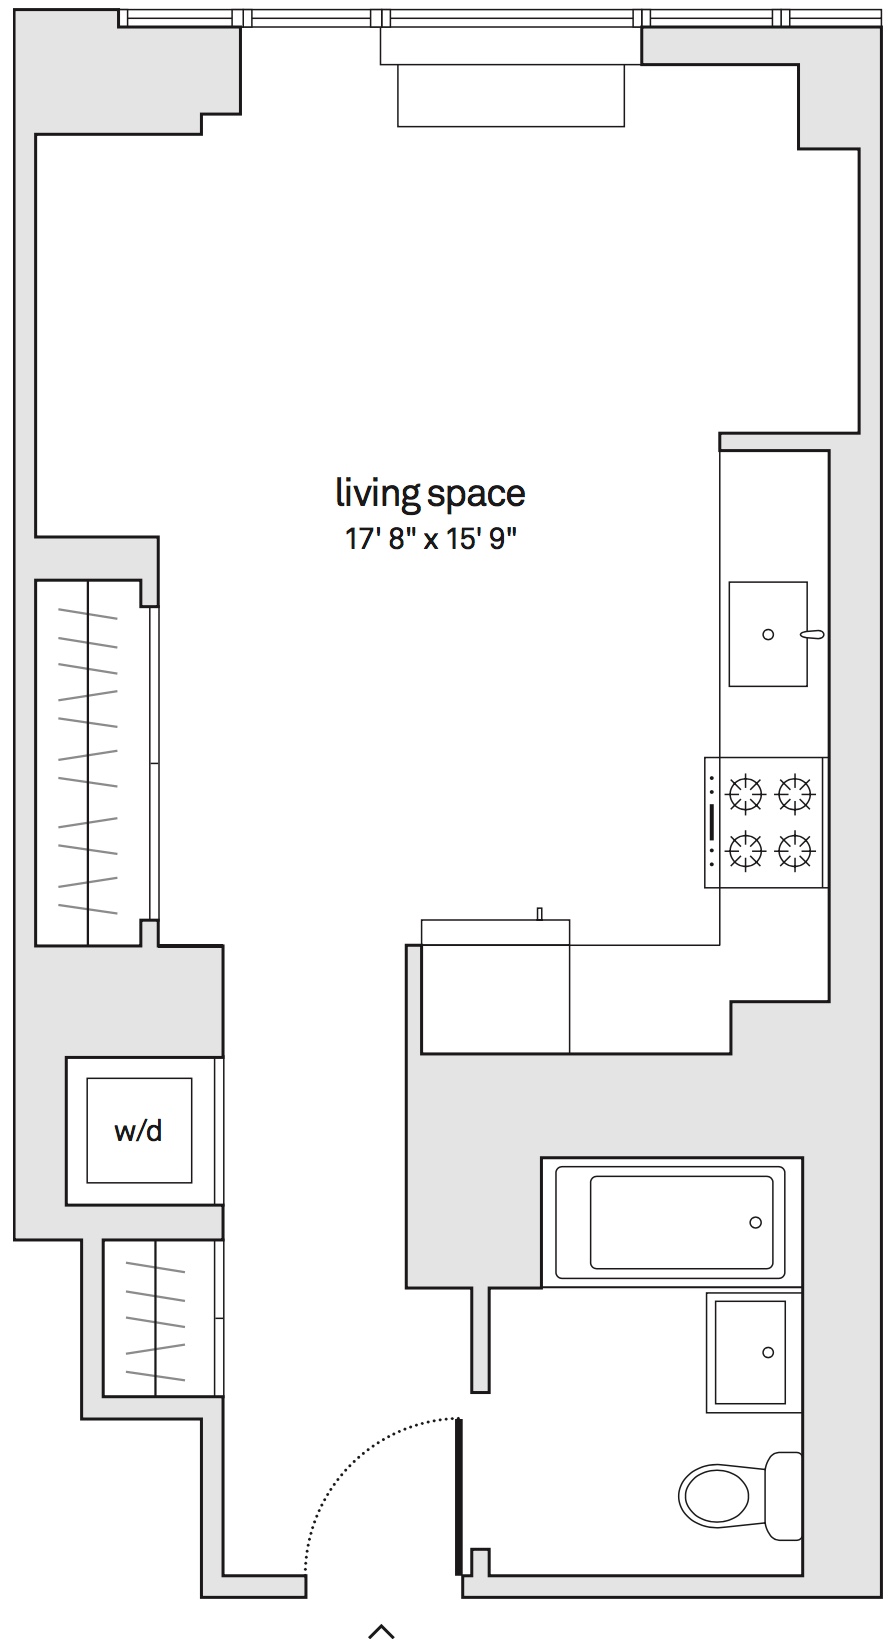 Floorplan of unit 29D.